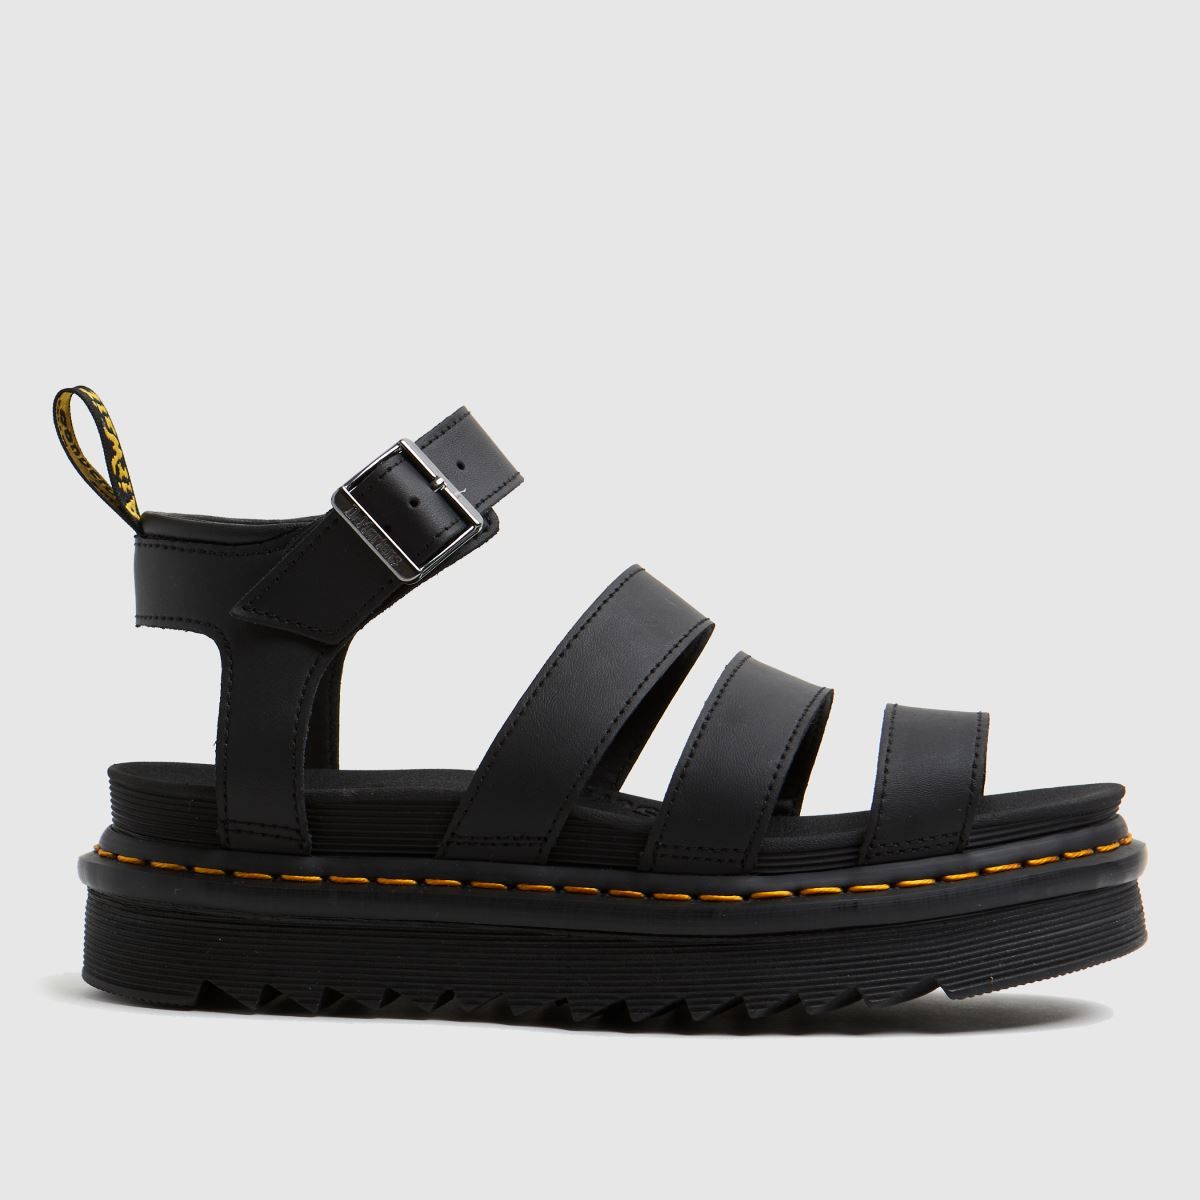 Dr Martens blaire sandals in black | Schuh